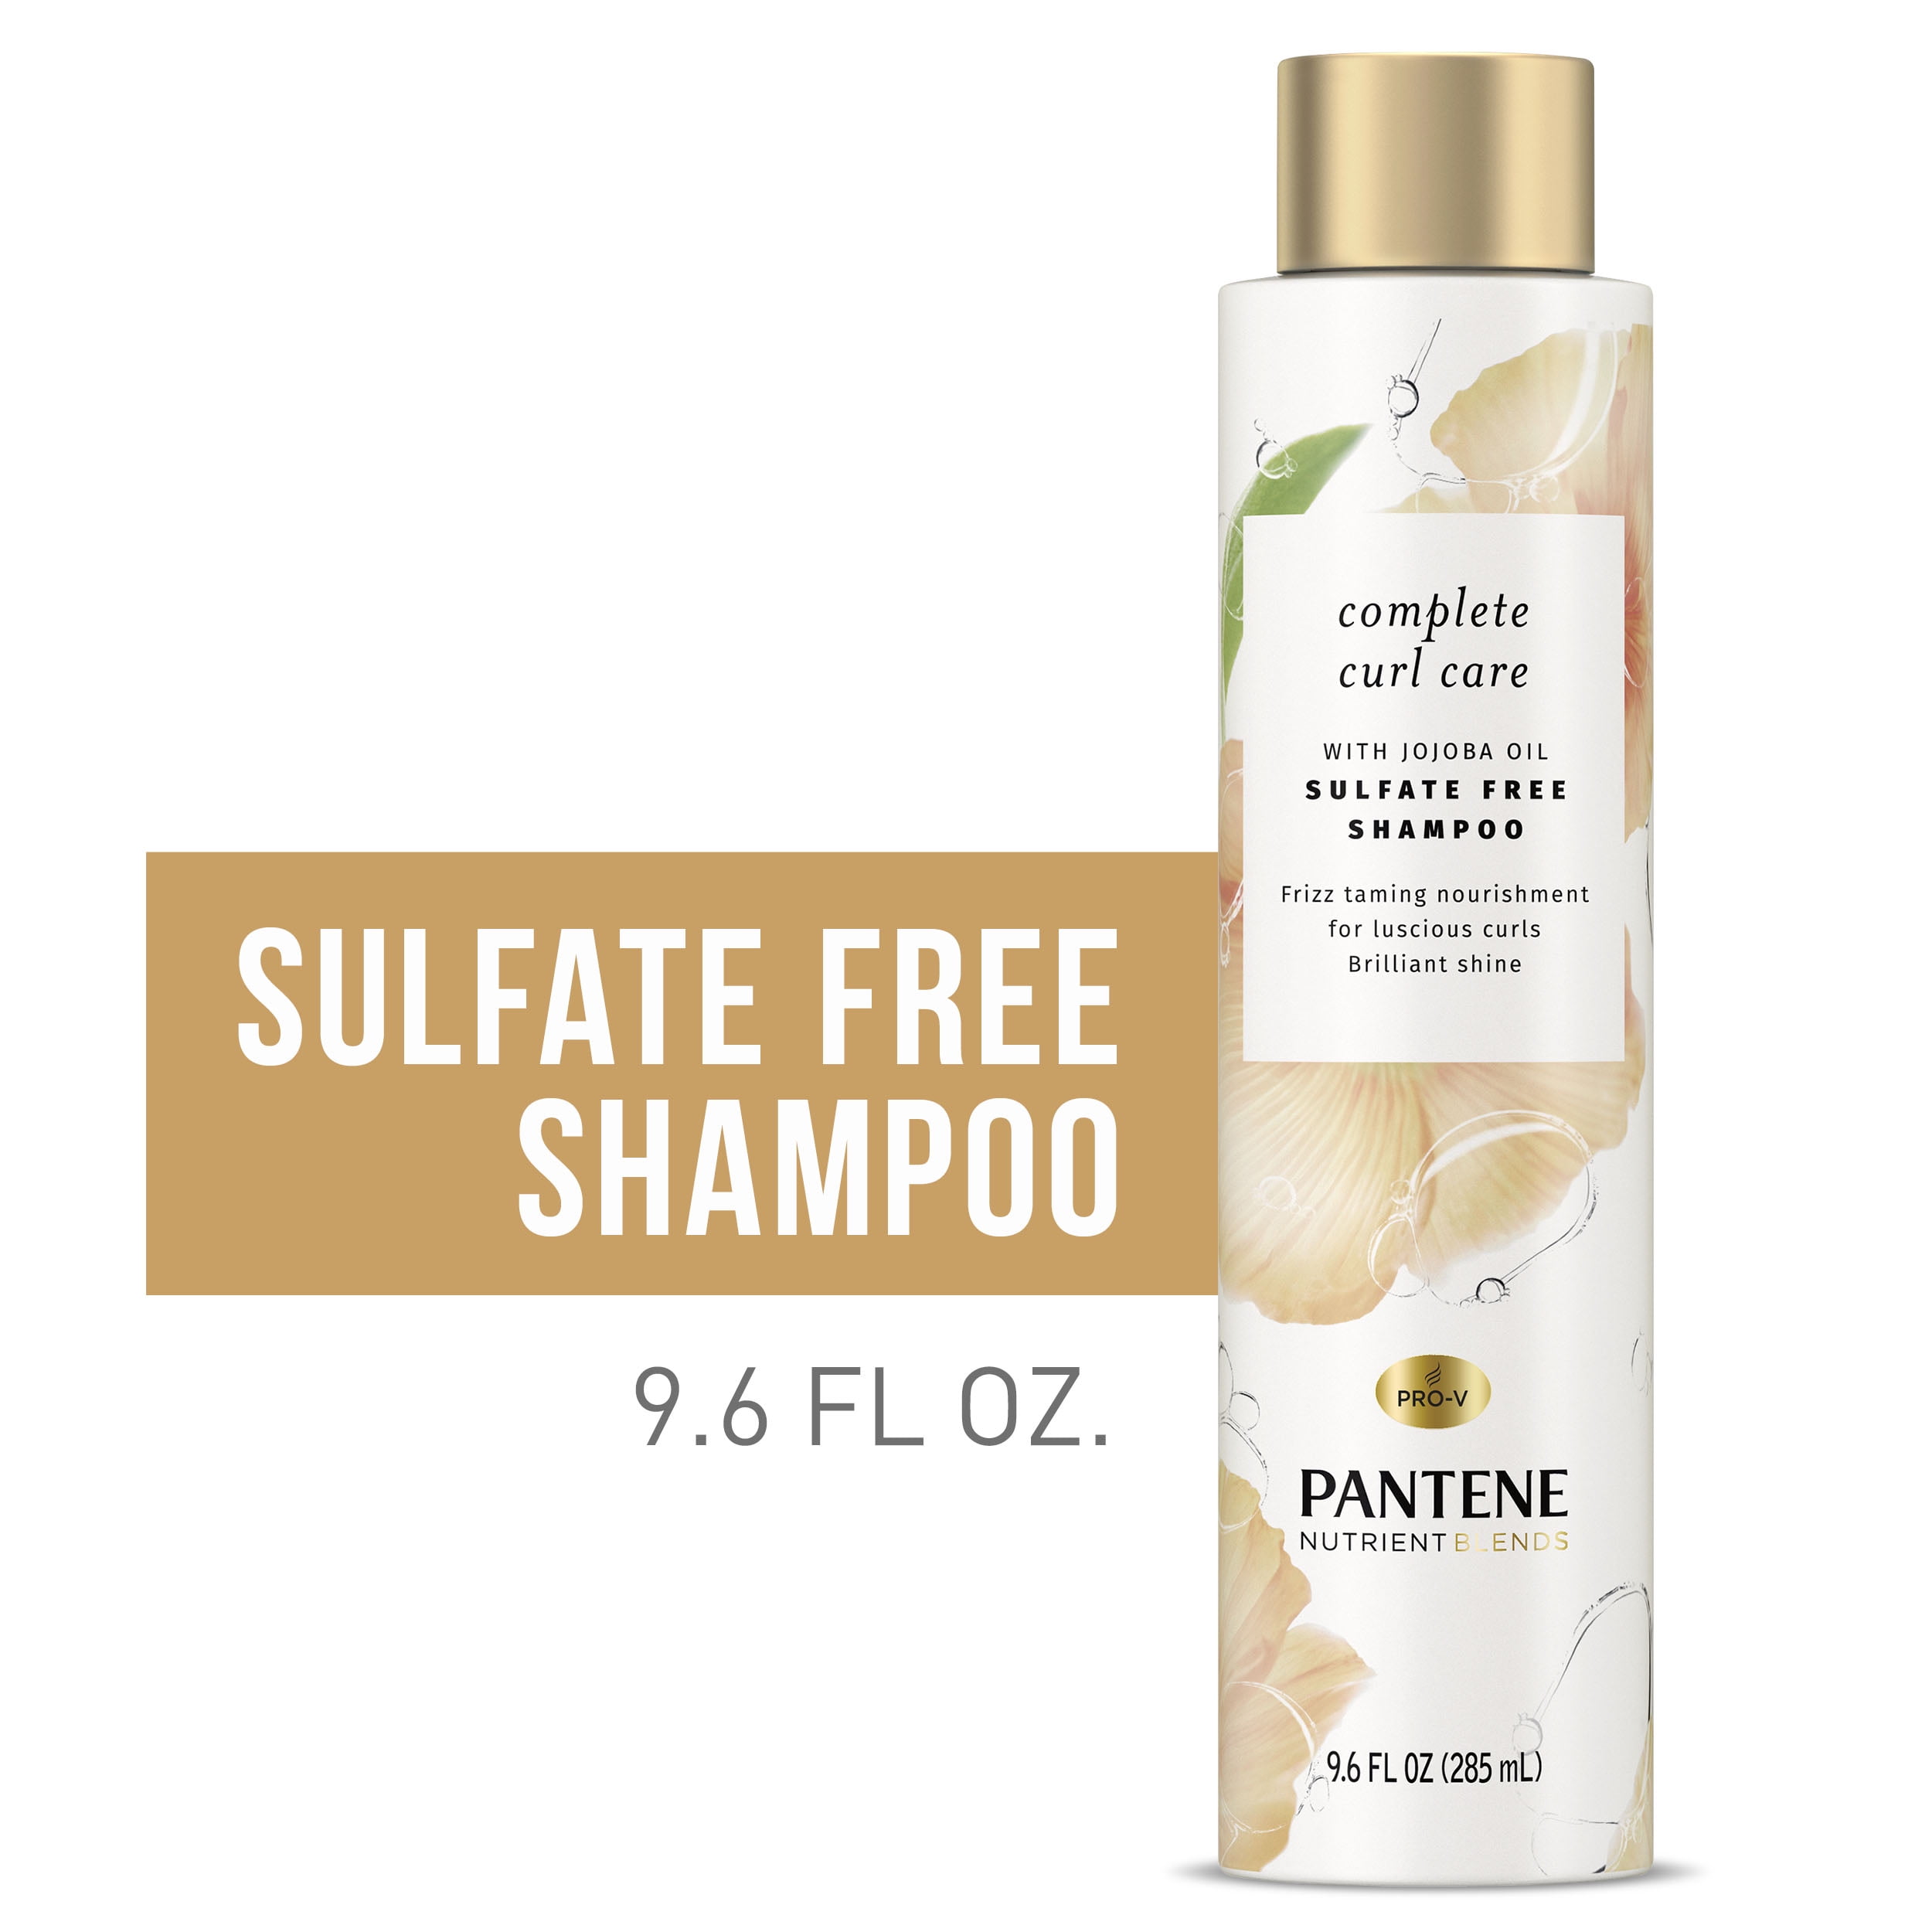 Pantene Nutrient Blends Shampoo, Complete Curl Care, 9.6 fl oz Walmart.com